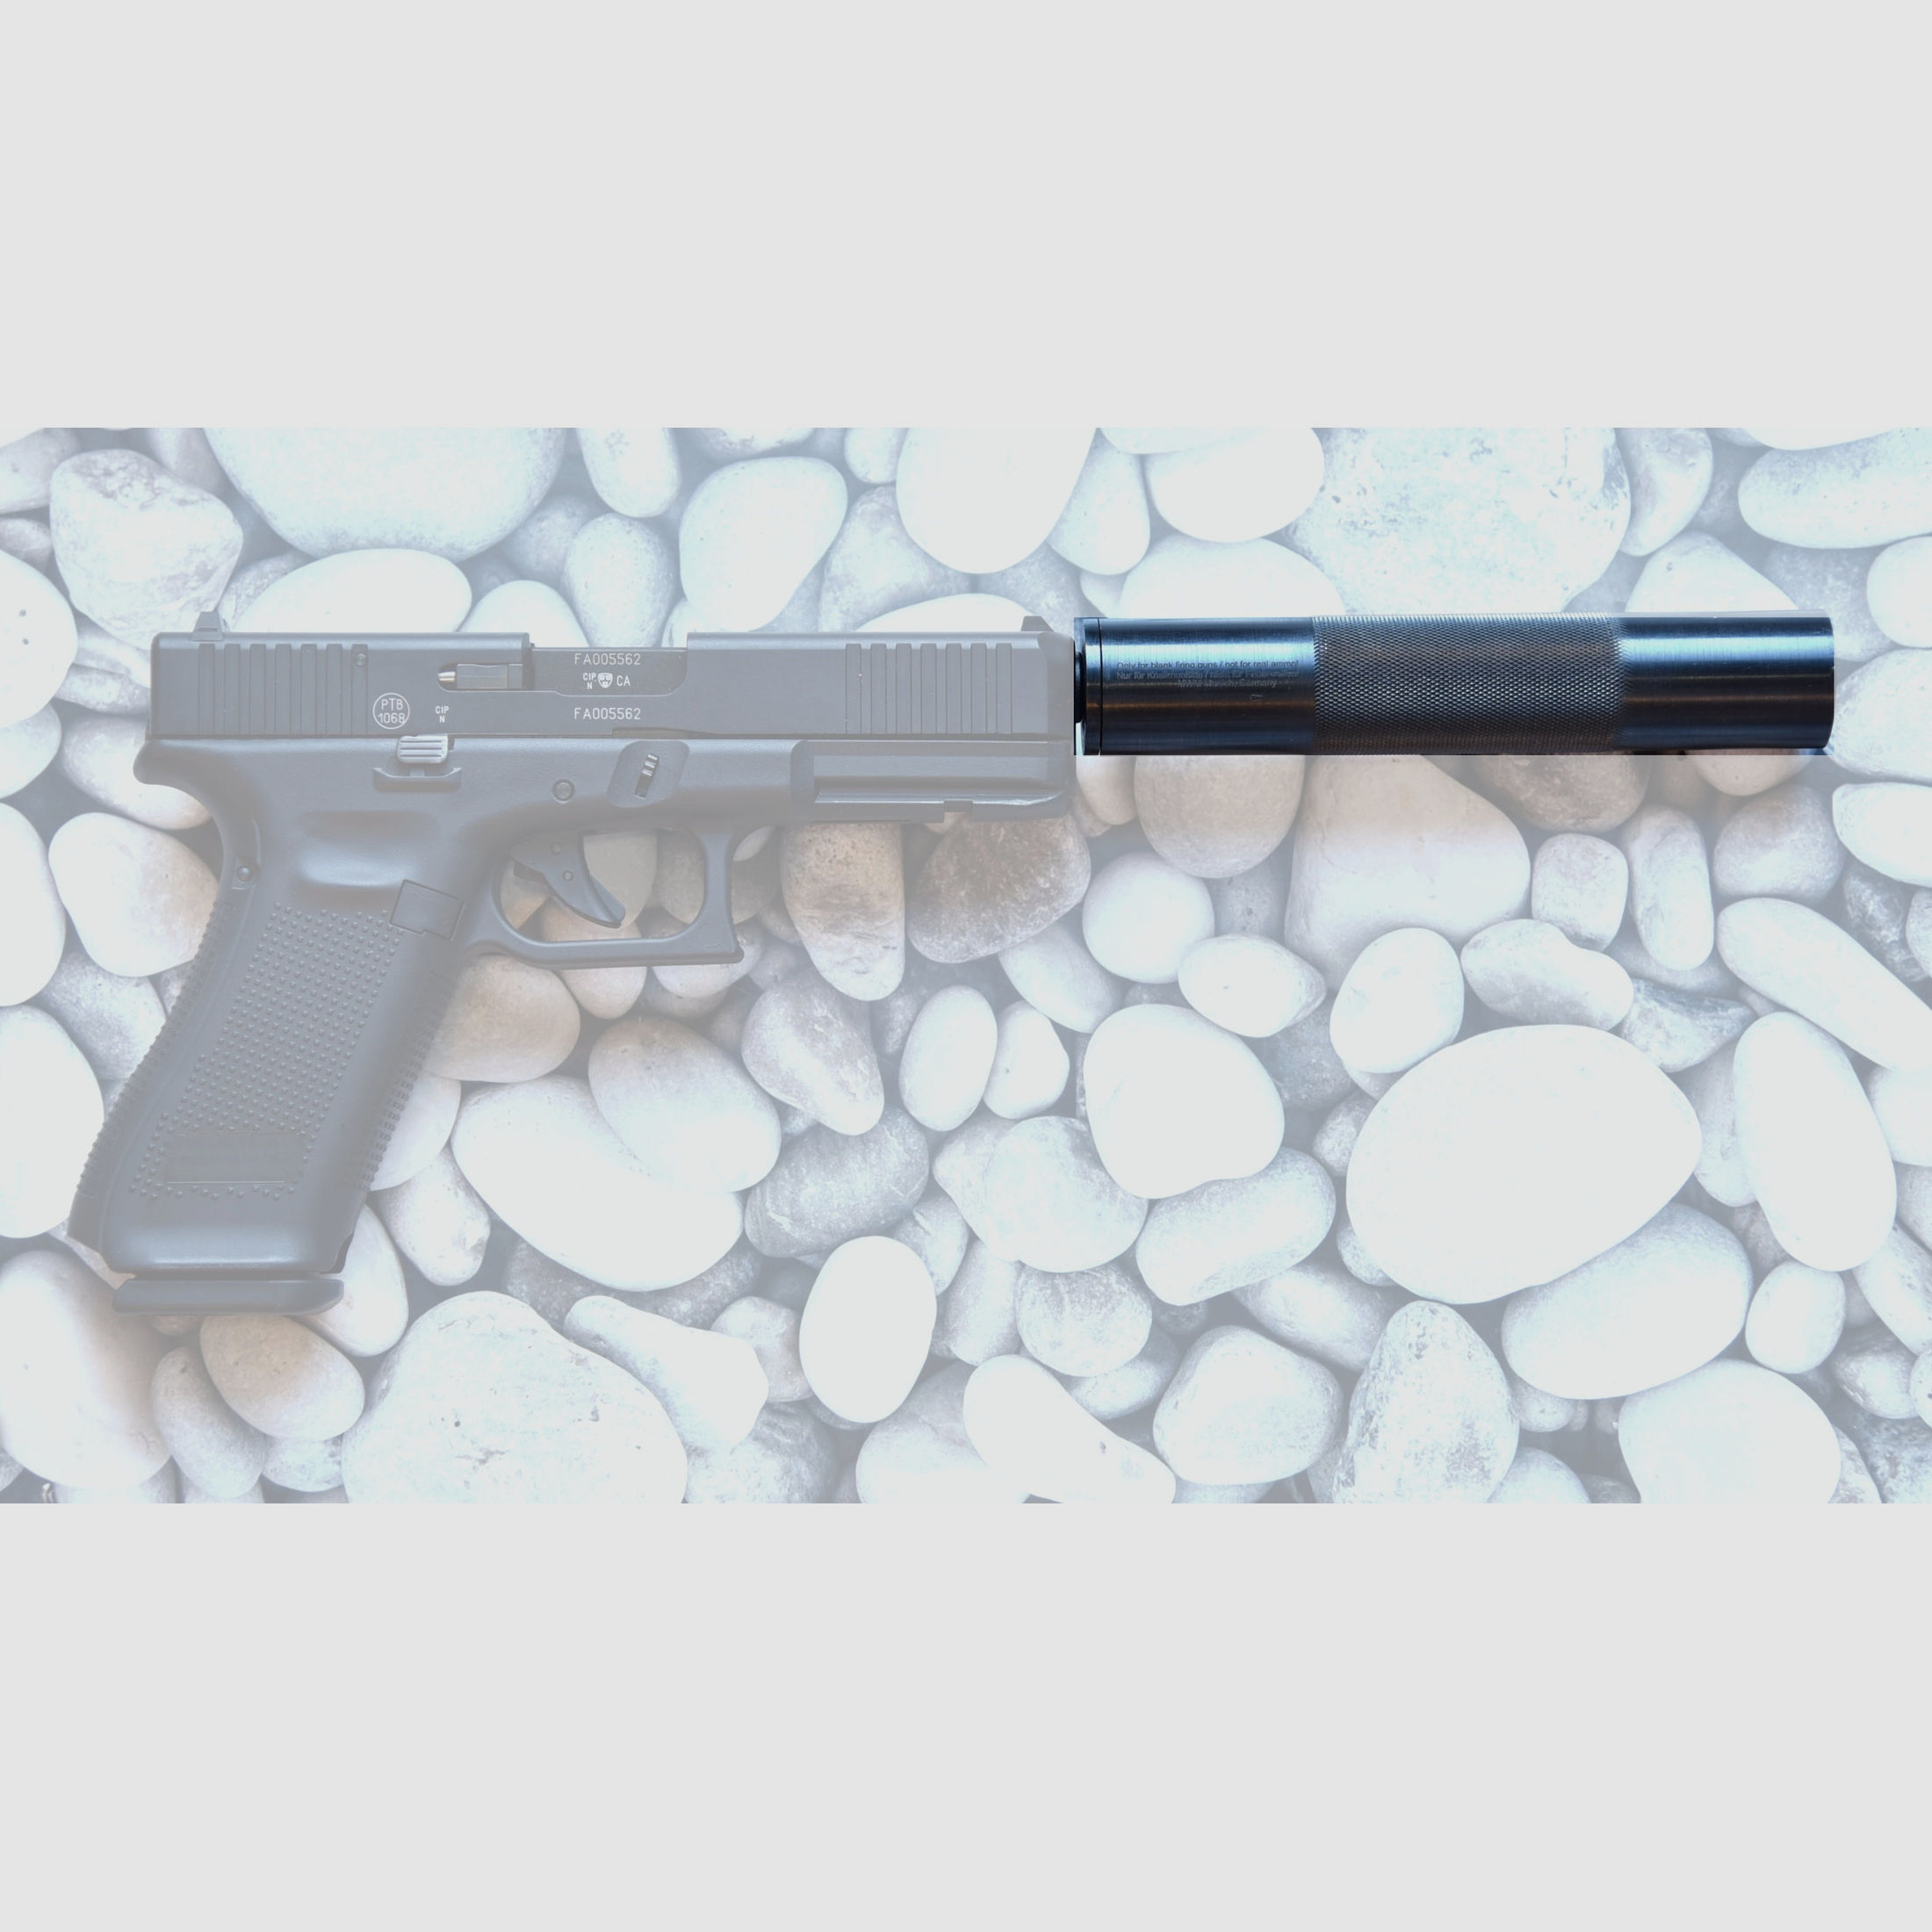 Schalldämpfer für PK380, Colt 1911, Zoraki, 9mm PAK KNALL